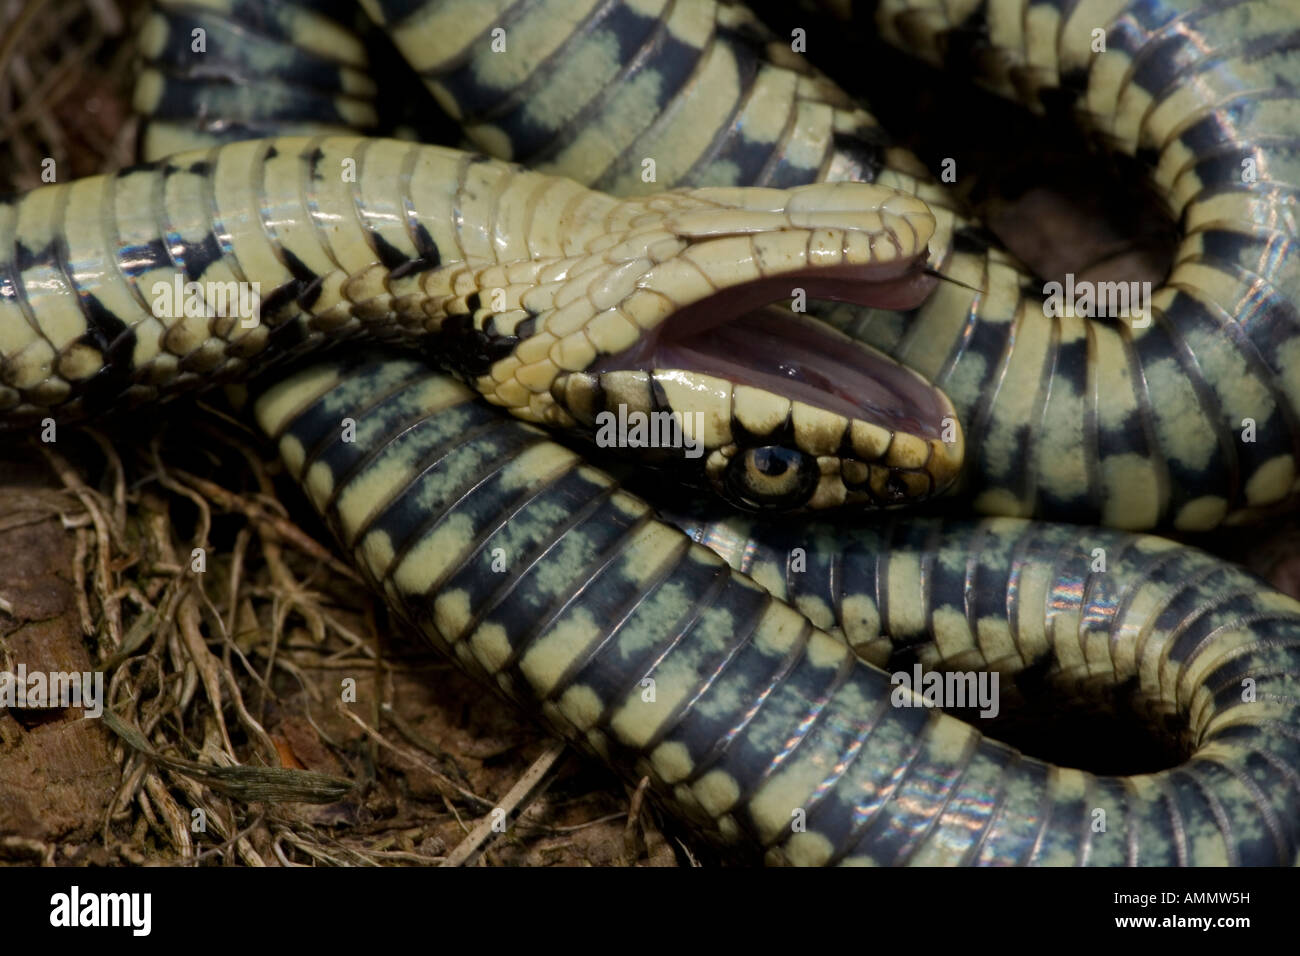 Grass Snake Natrix natrix Feigning death in defensive posture England UK Stock Photo